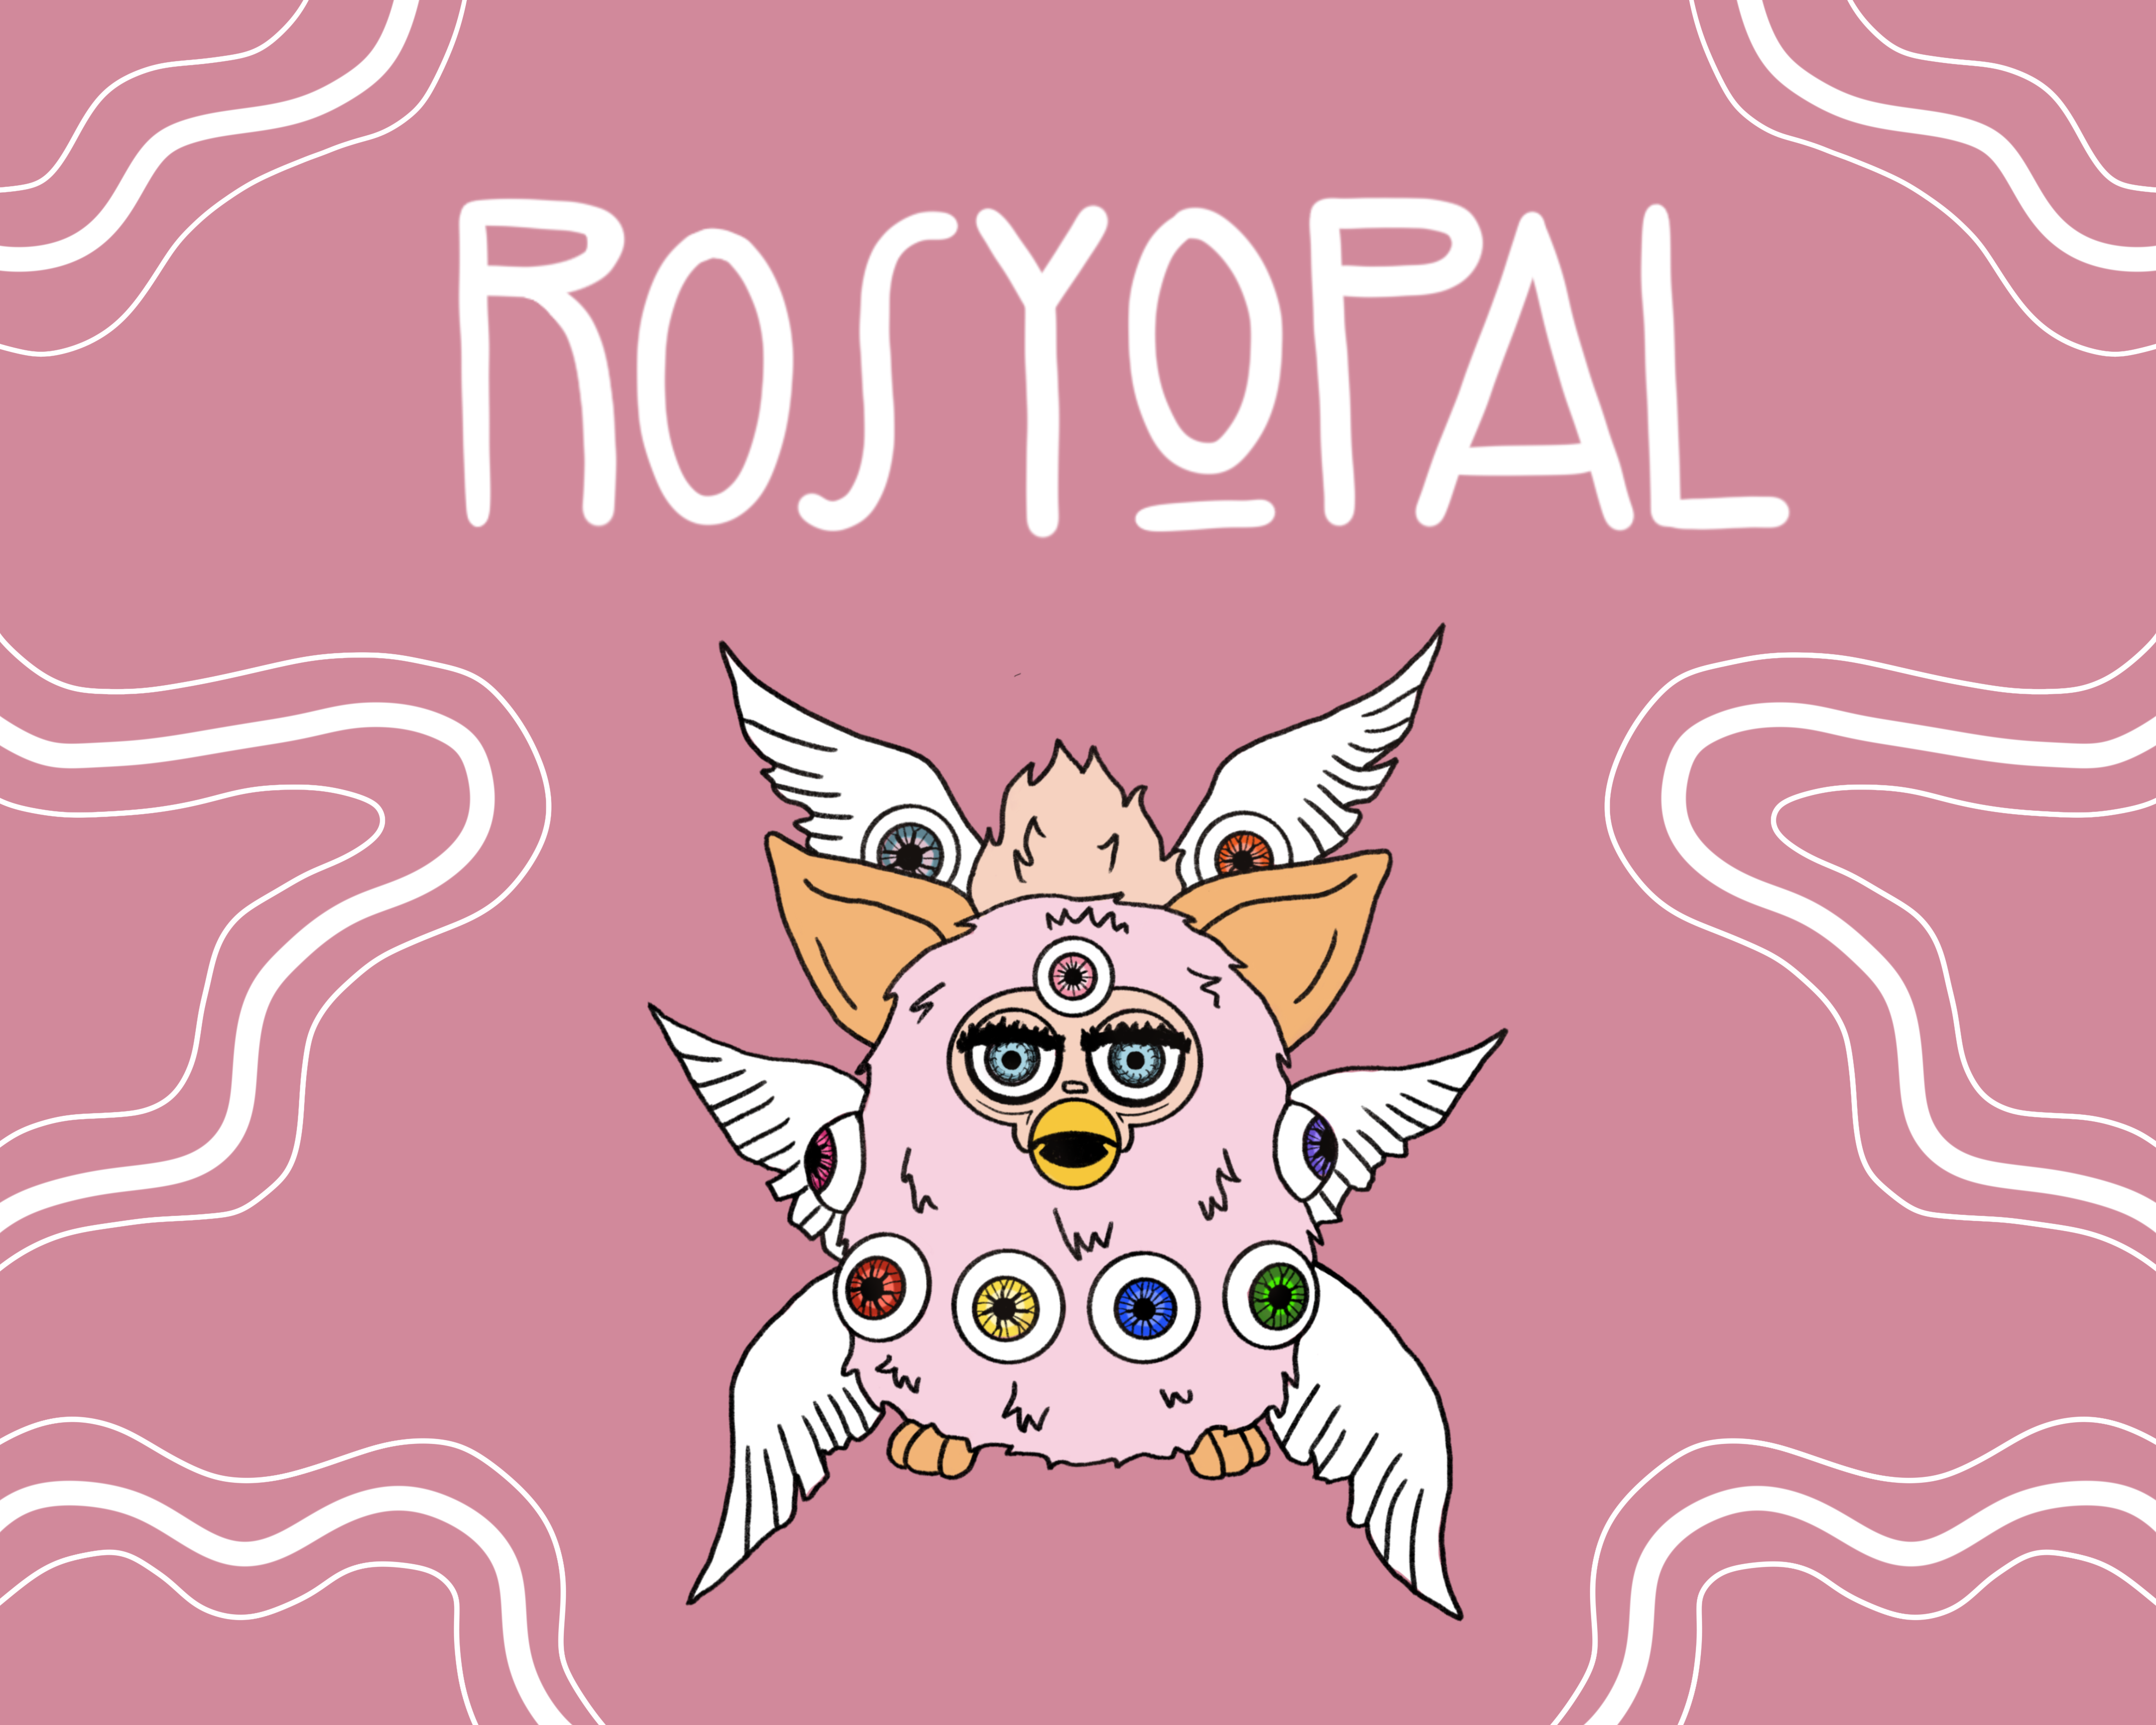 Rosyopal Logo